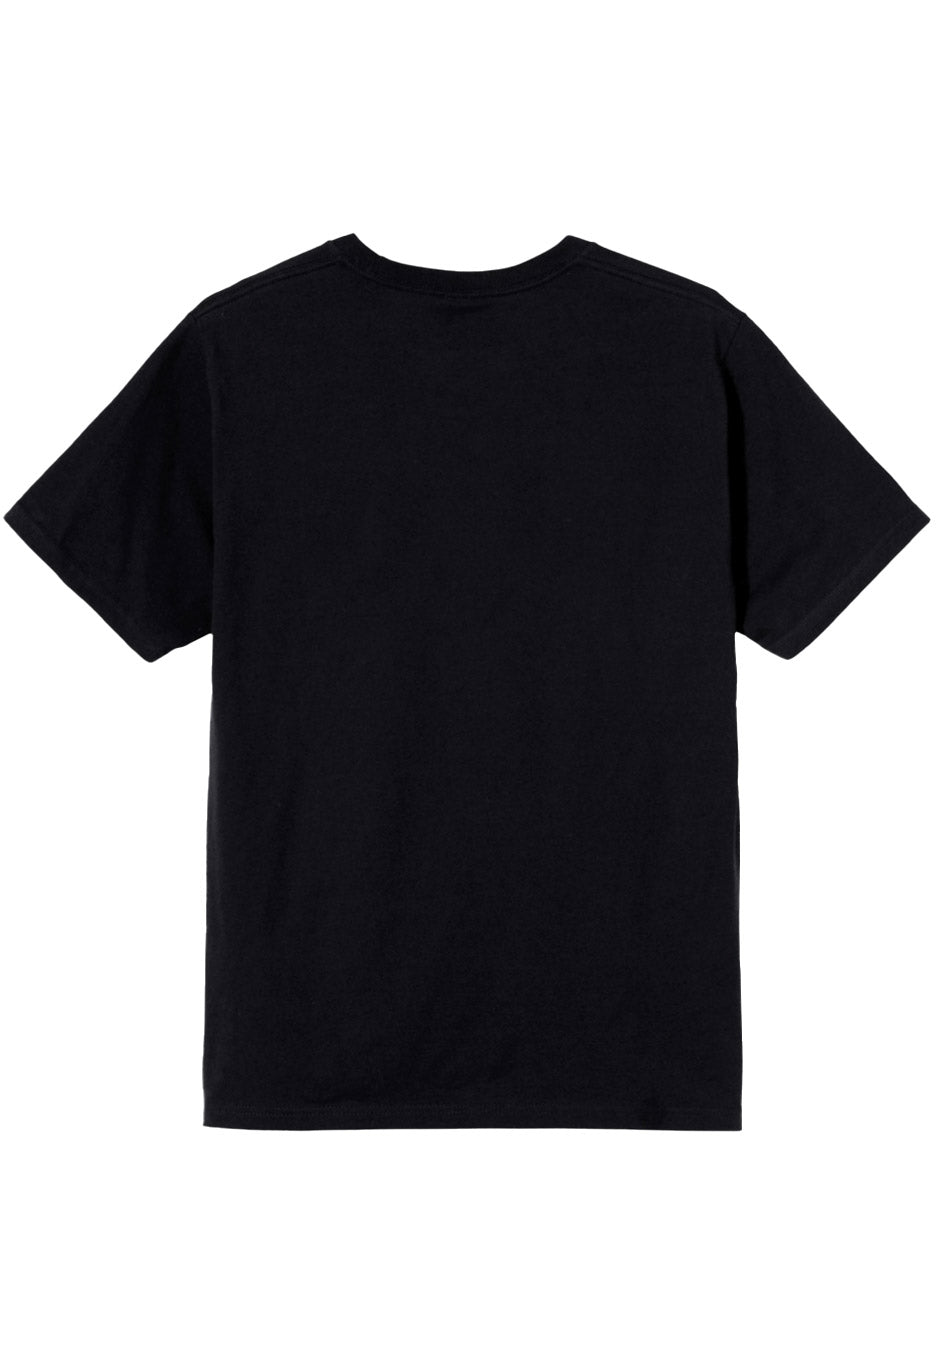 Killswitch Engage - Skull Spraypaint - T-Shirt | Neutral-Image